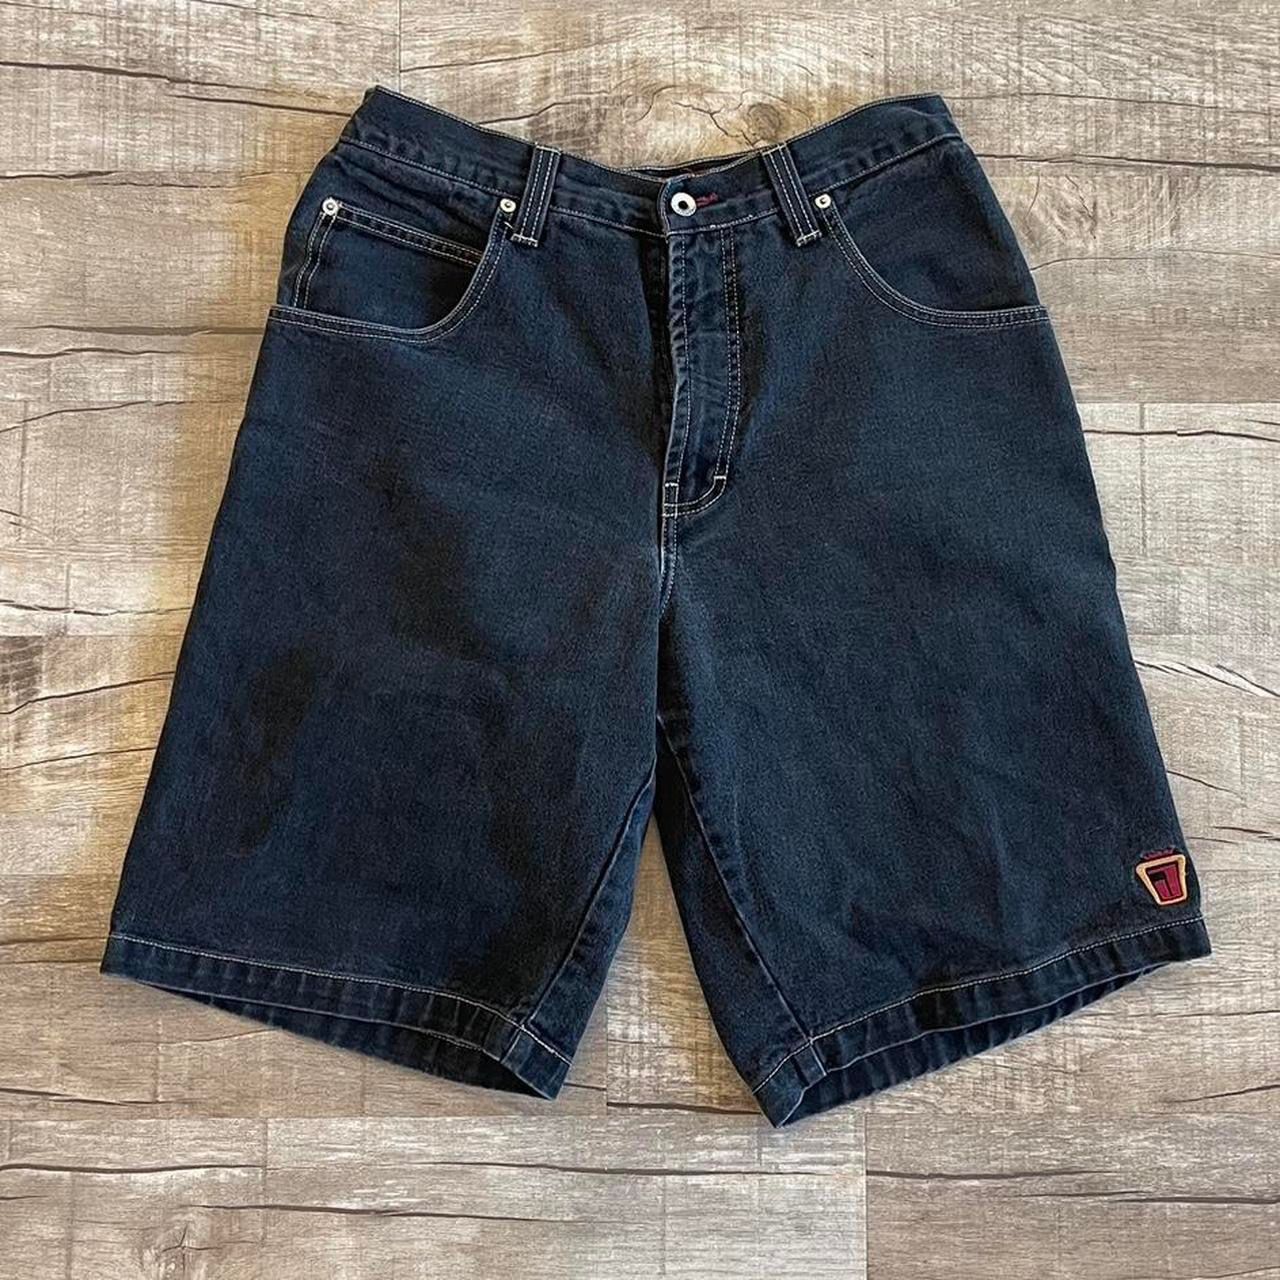 Jnco 1990’s JNCO Jeans Denim Shorts | Grailed